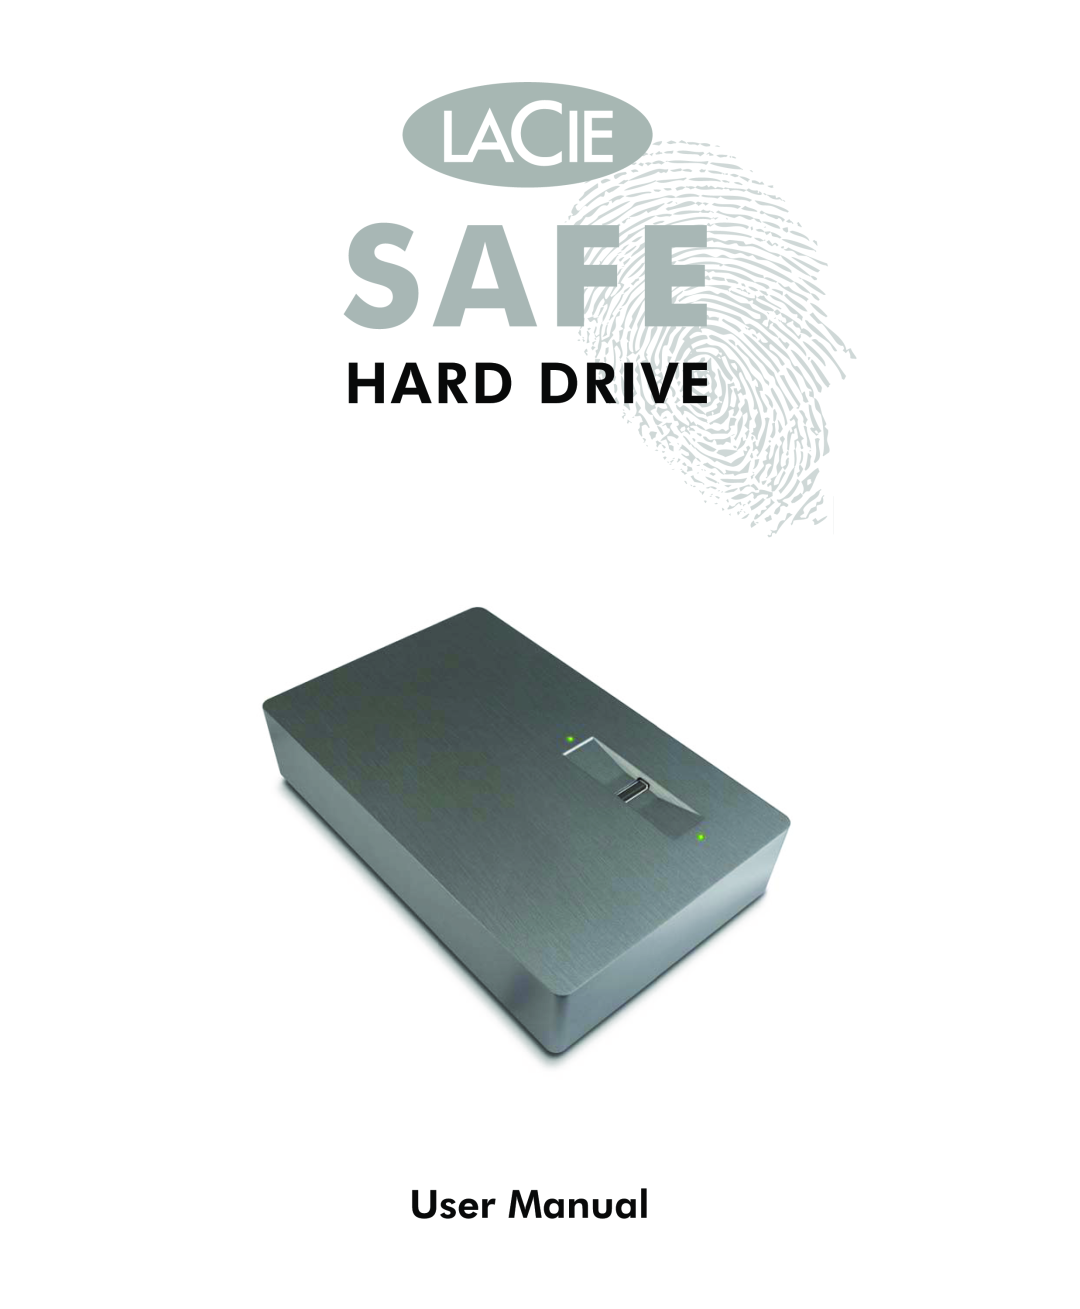 LaCie SAFE manual Safe, Hard Drive, User Manual 